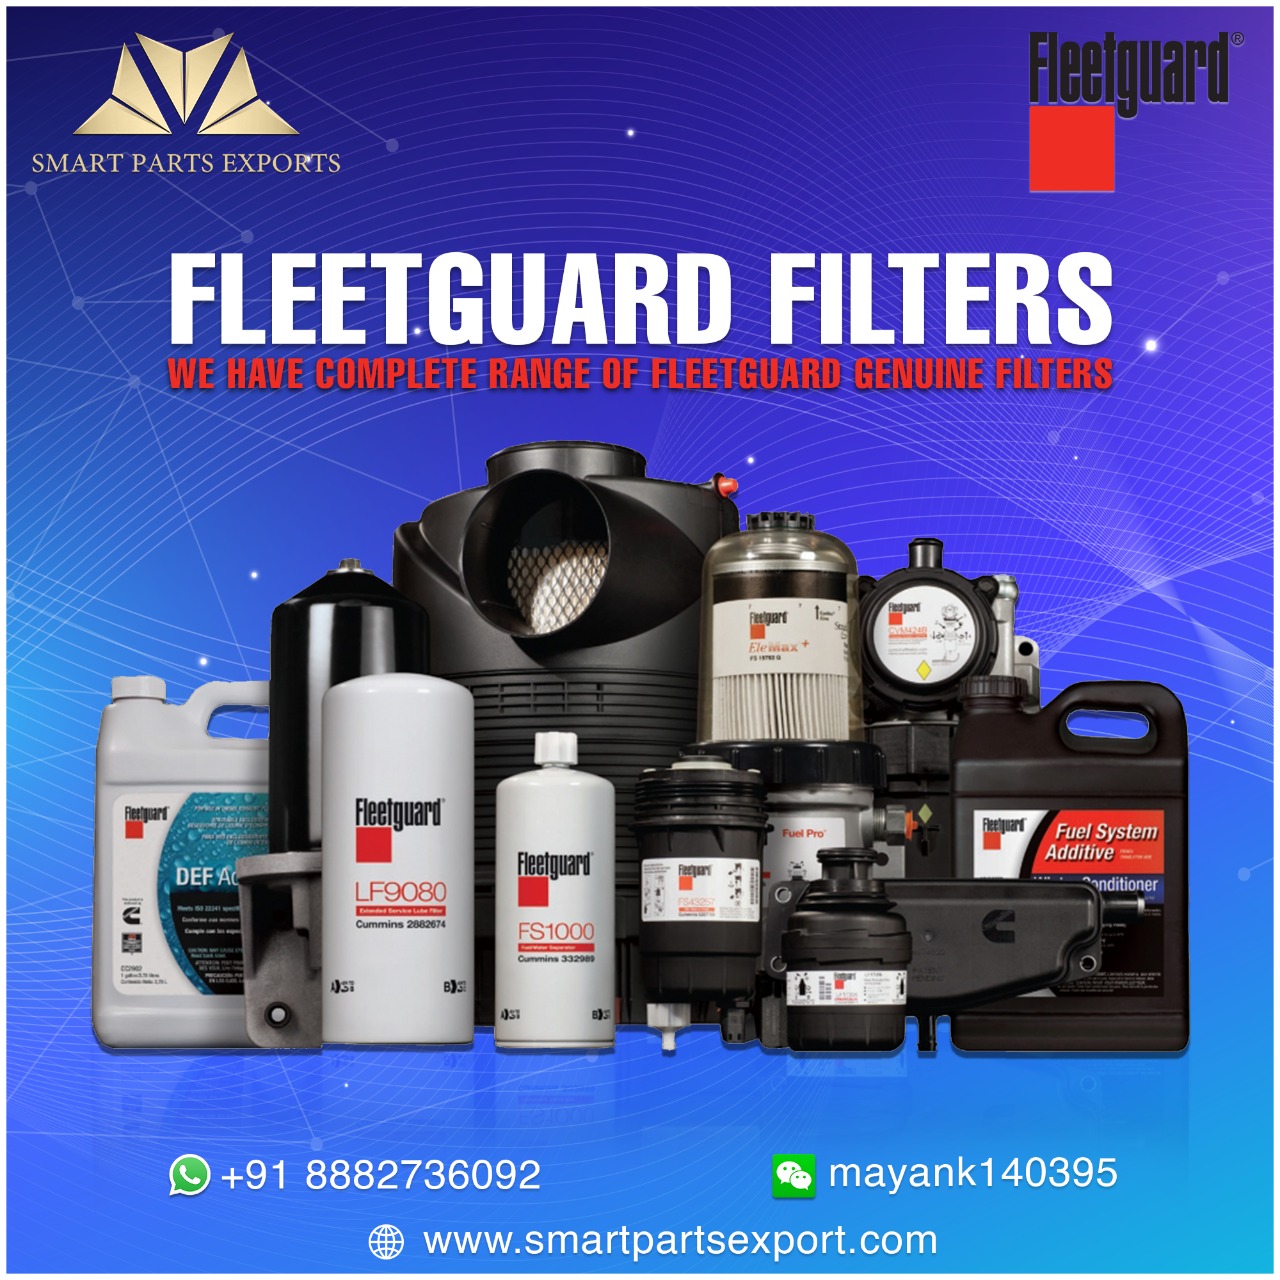 Fleetguard genuine filter